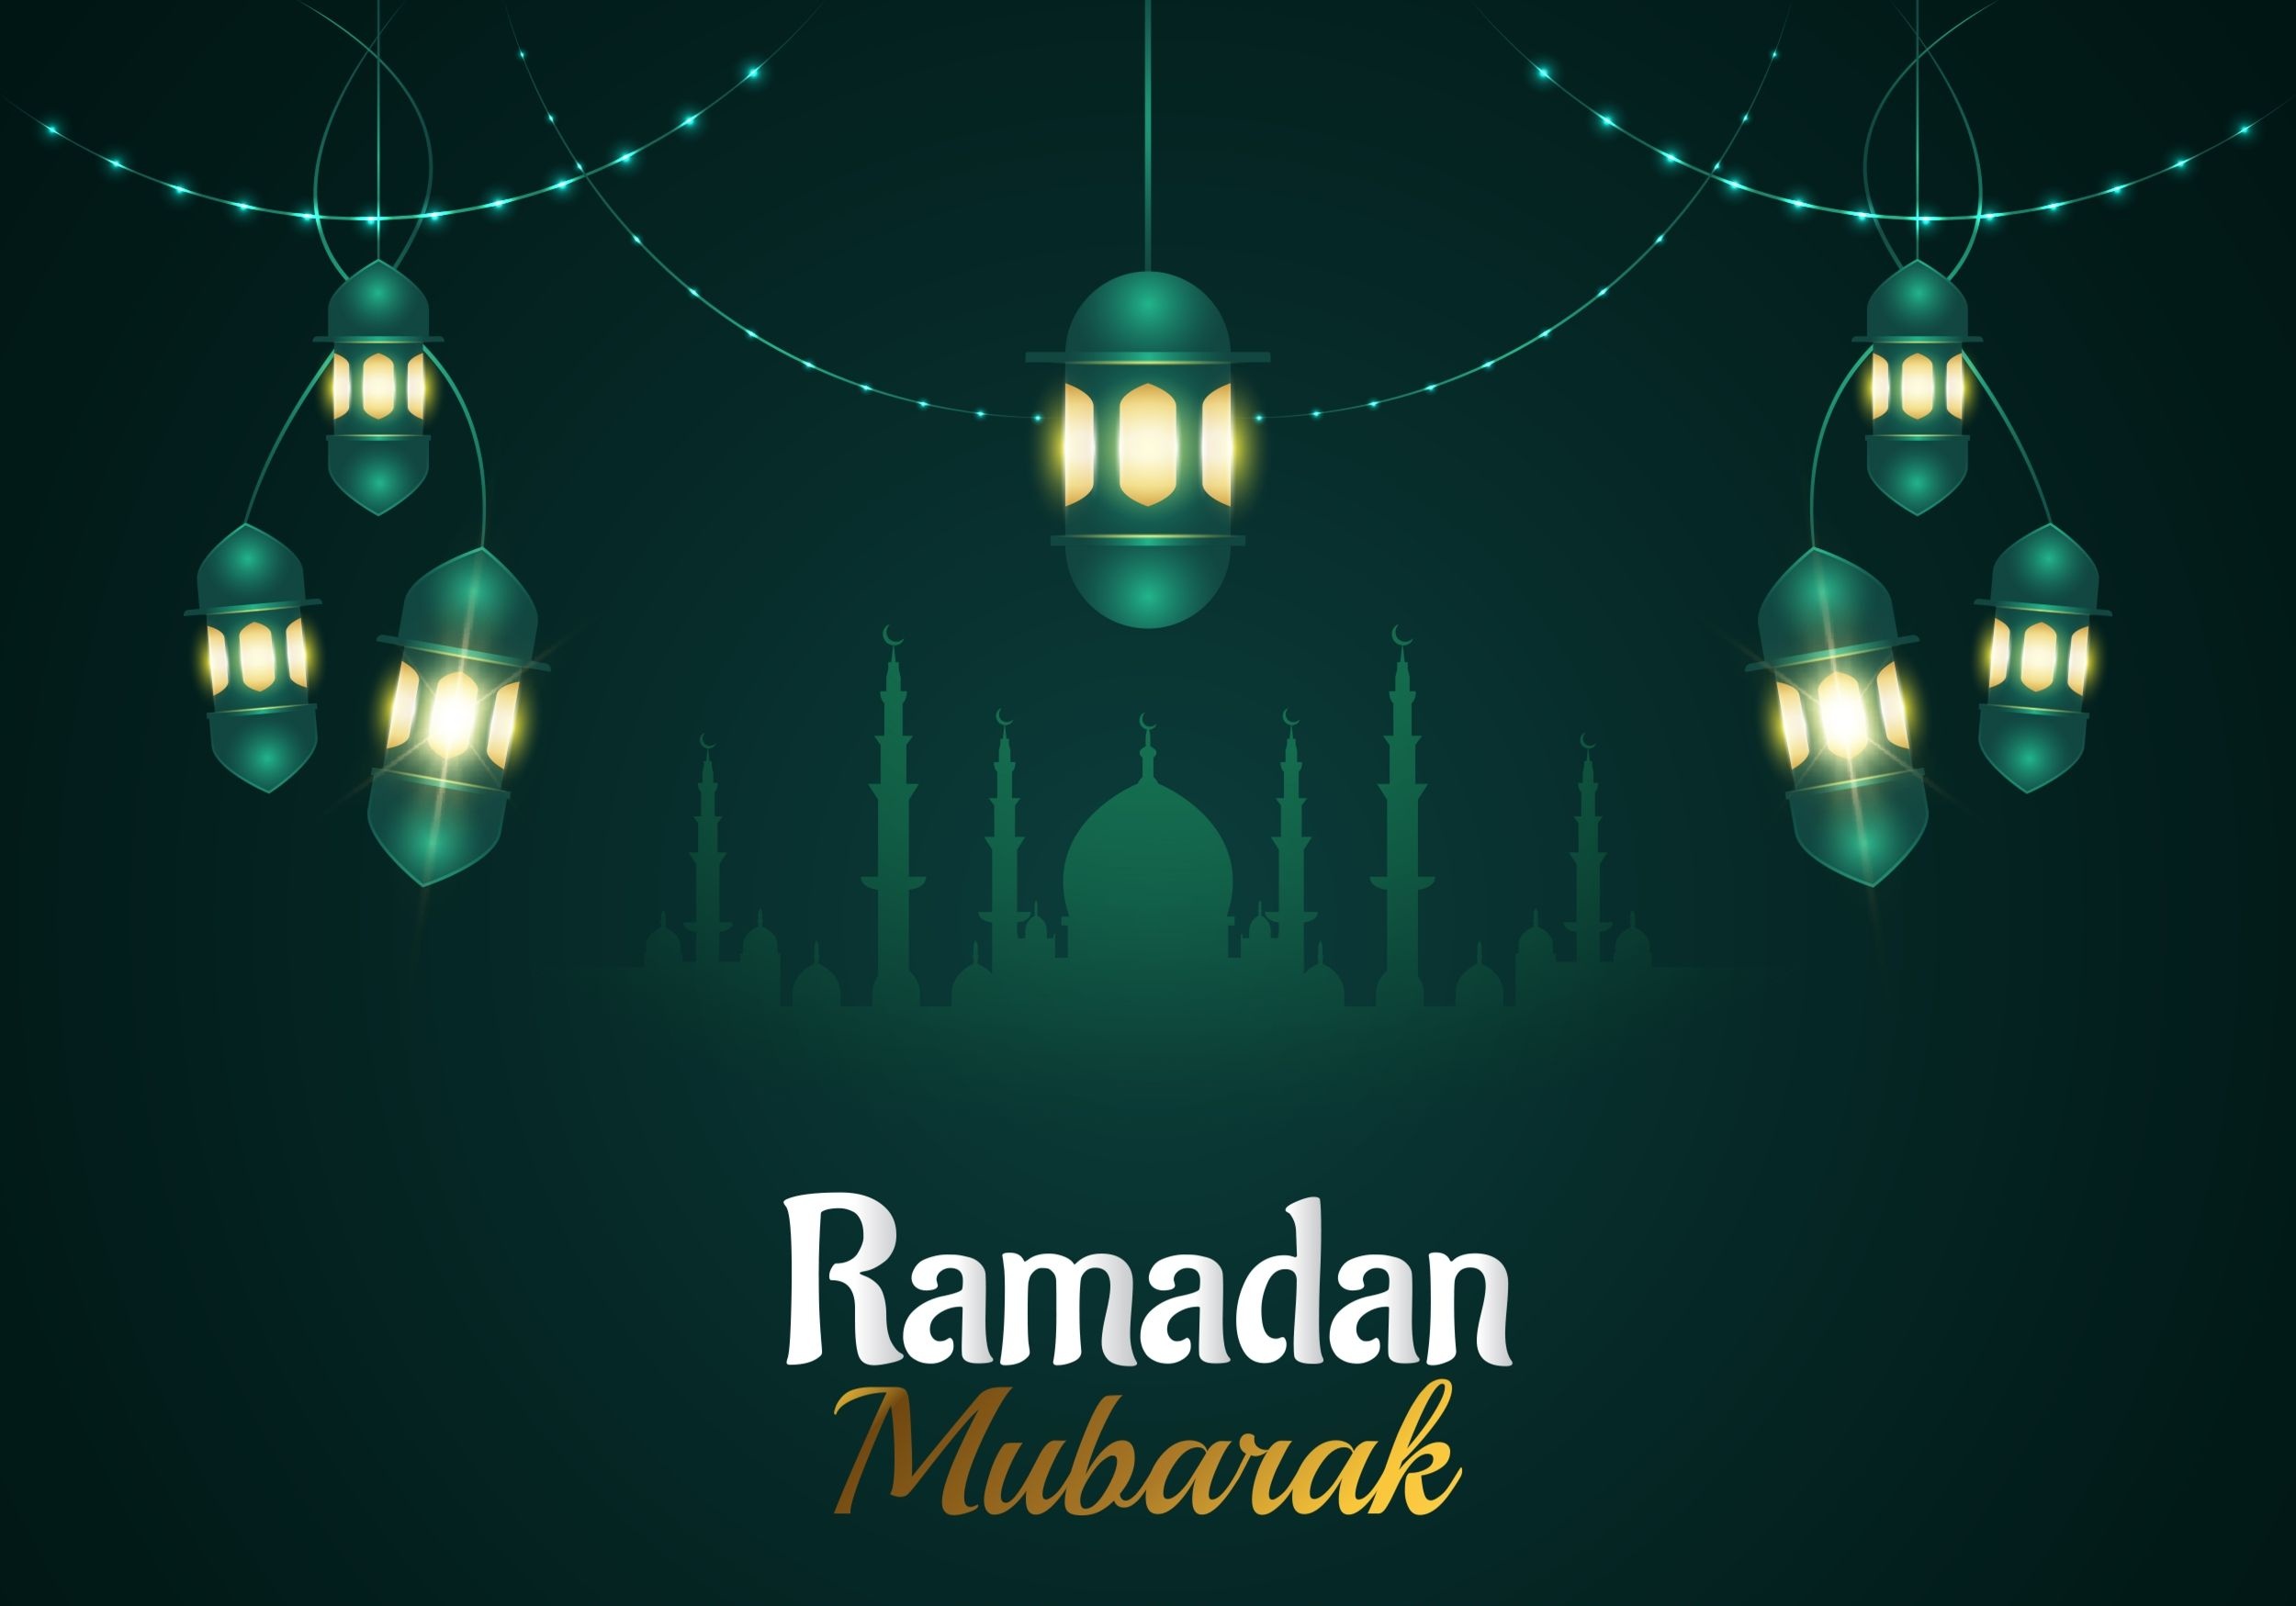 Graphich with words Ramadan mubarak